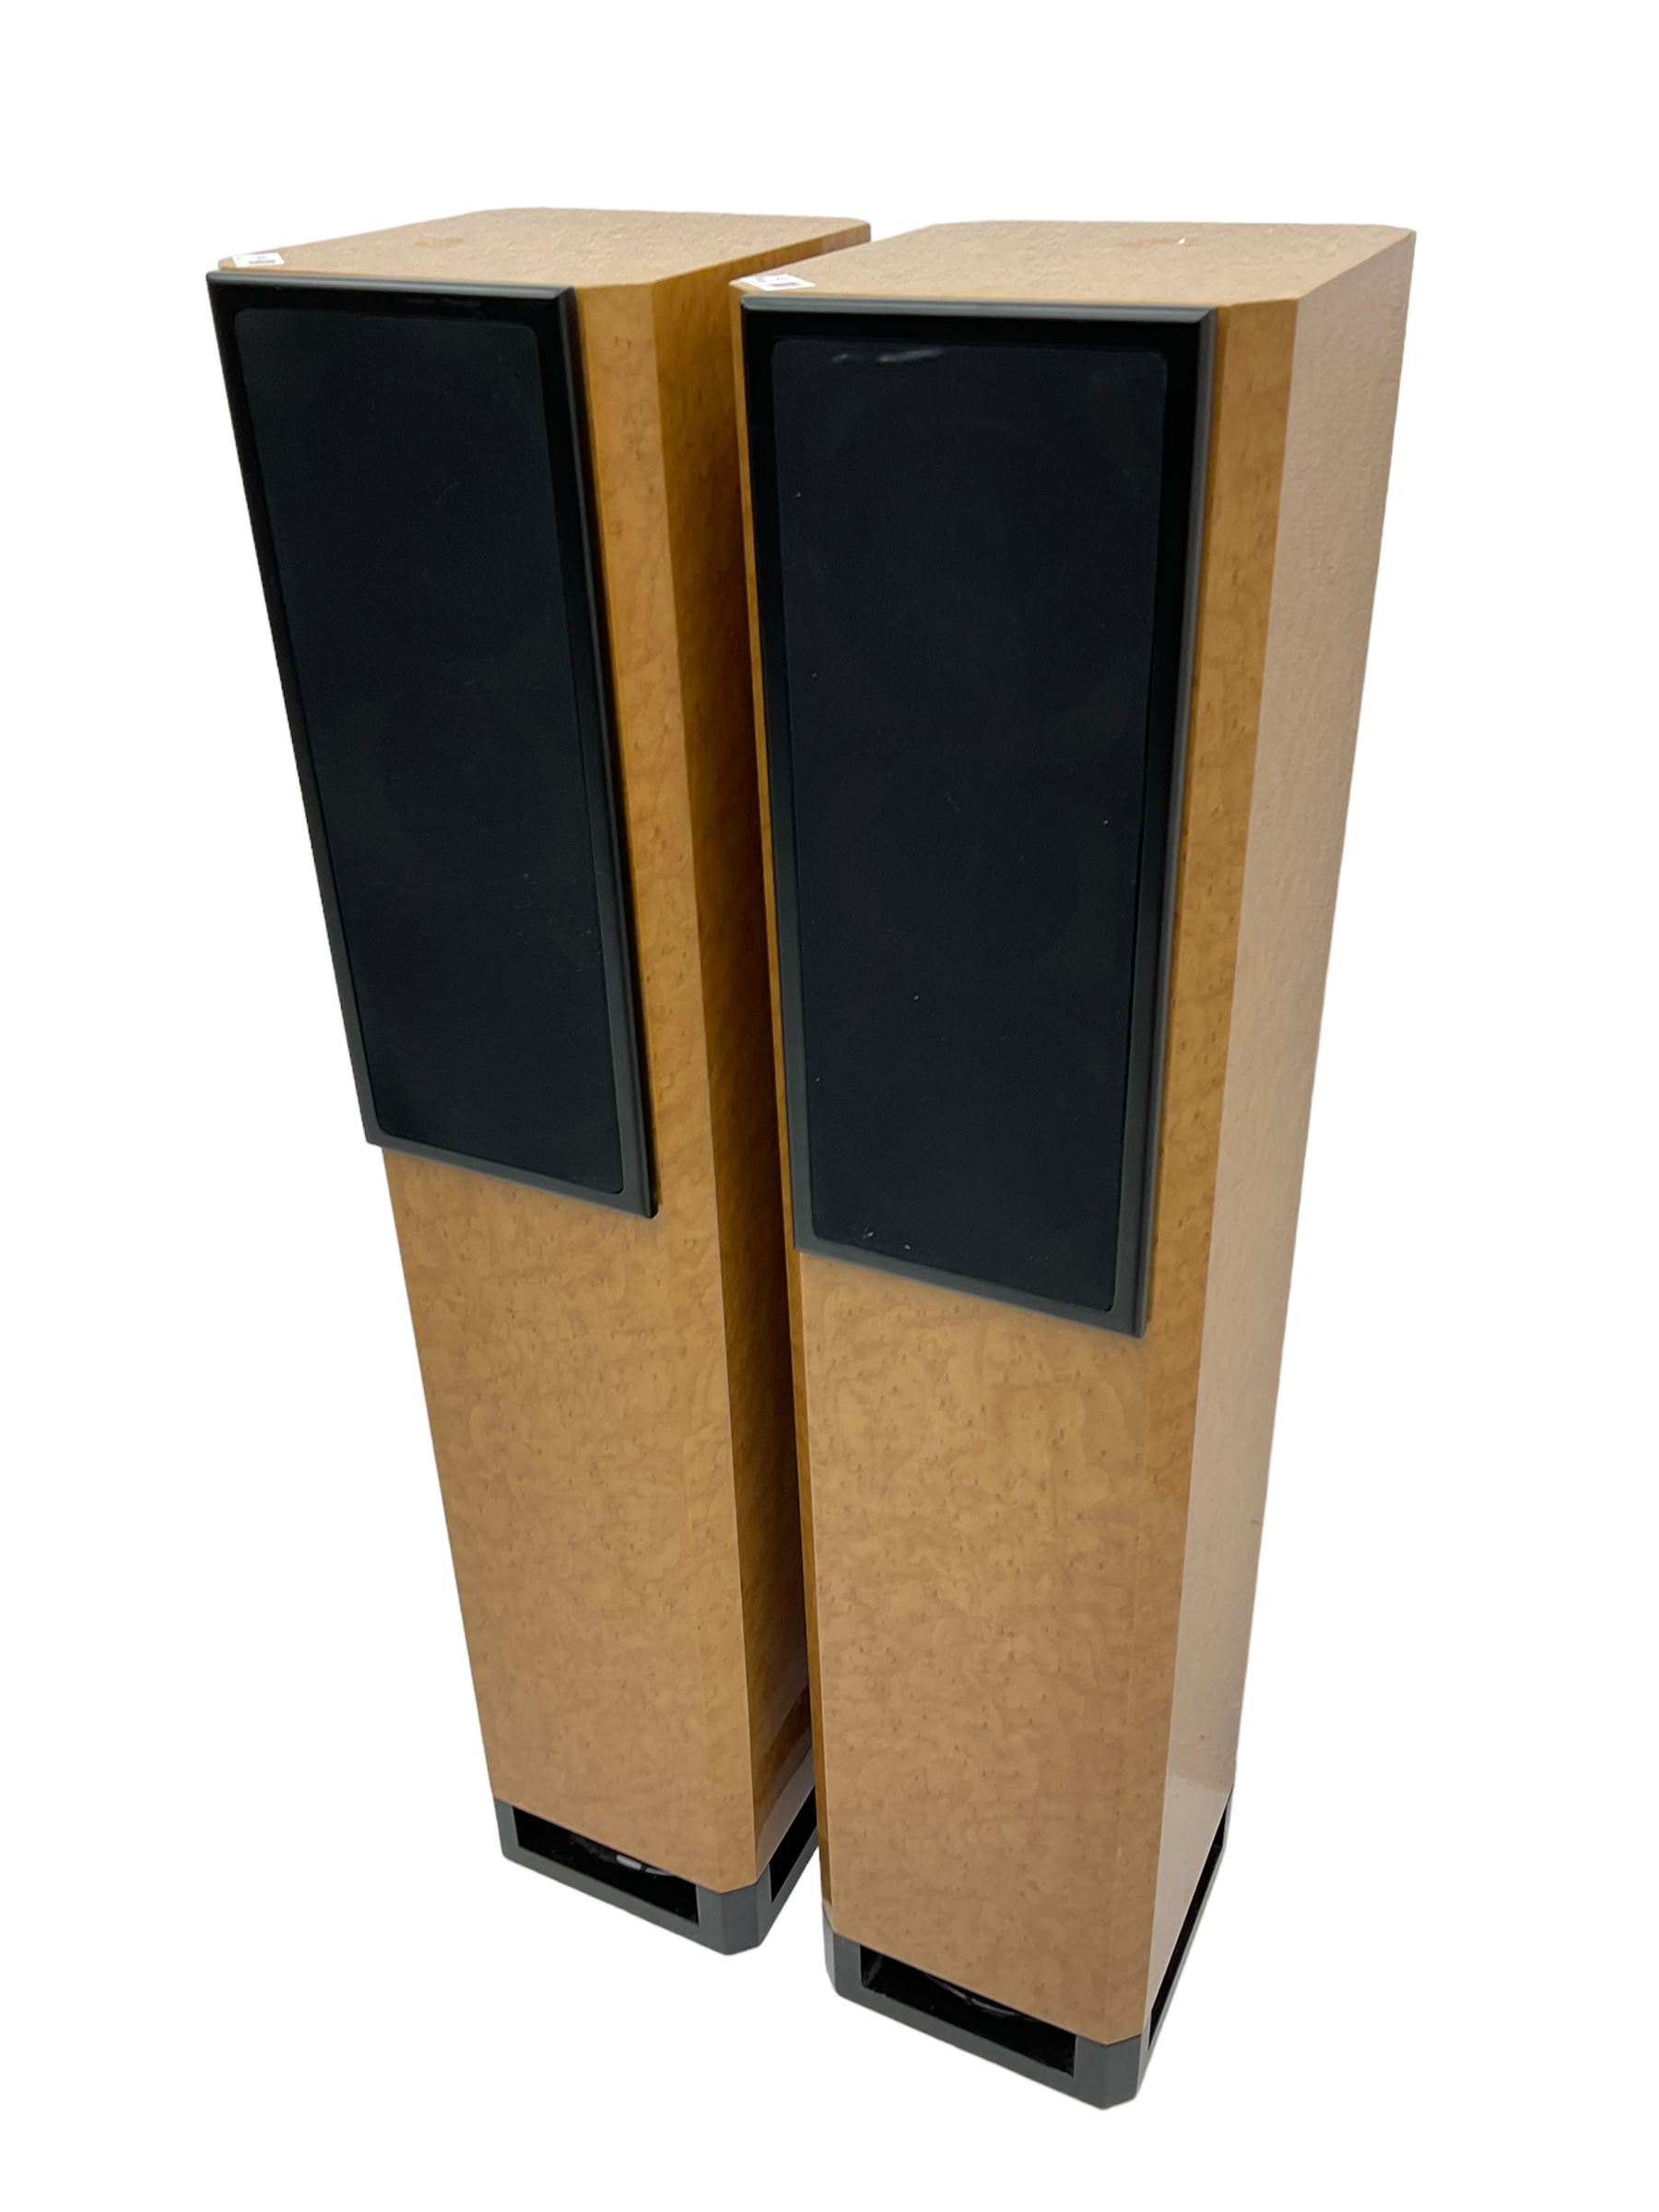 Pair Lake Audio 120W floorstanding speakers in maple finish - Image 5 of 6